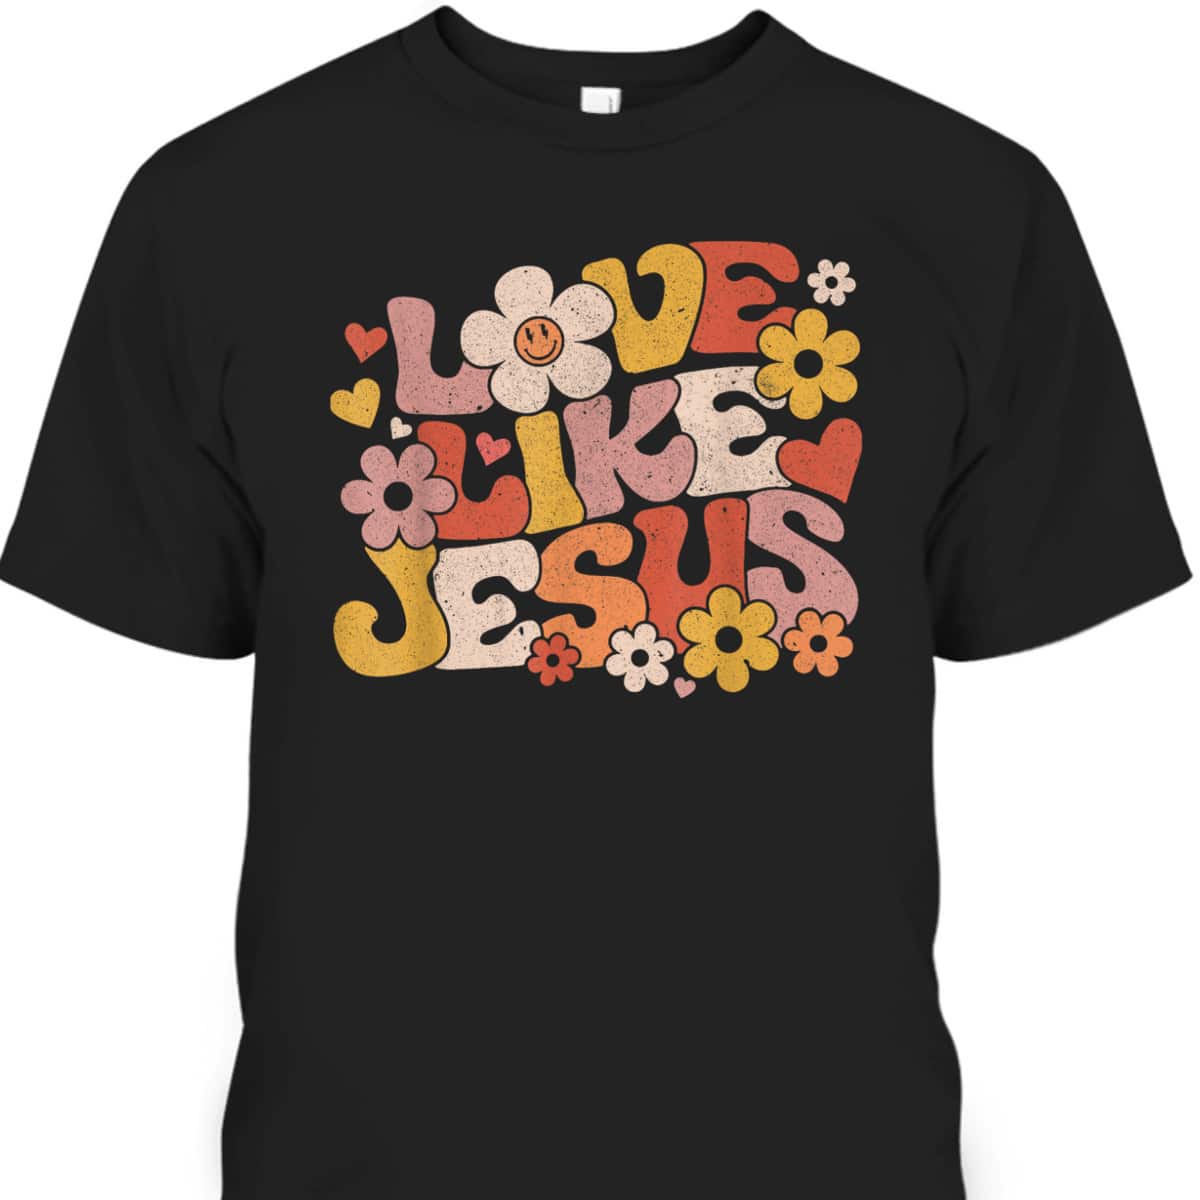 Love Like Jesus Christian Bible Verse Trendy Floral T-Shirt